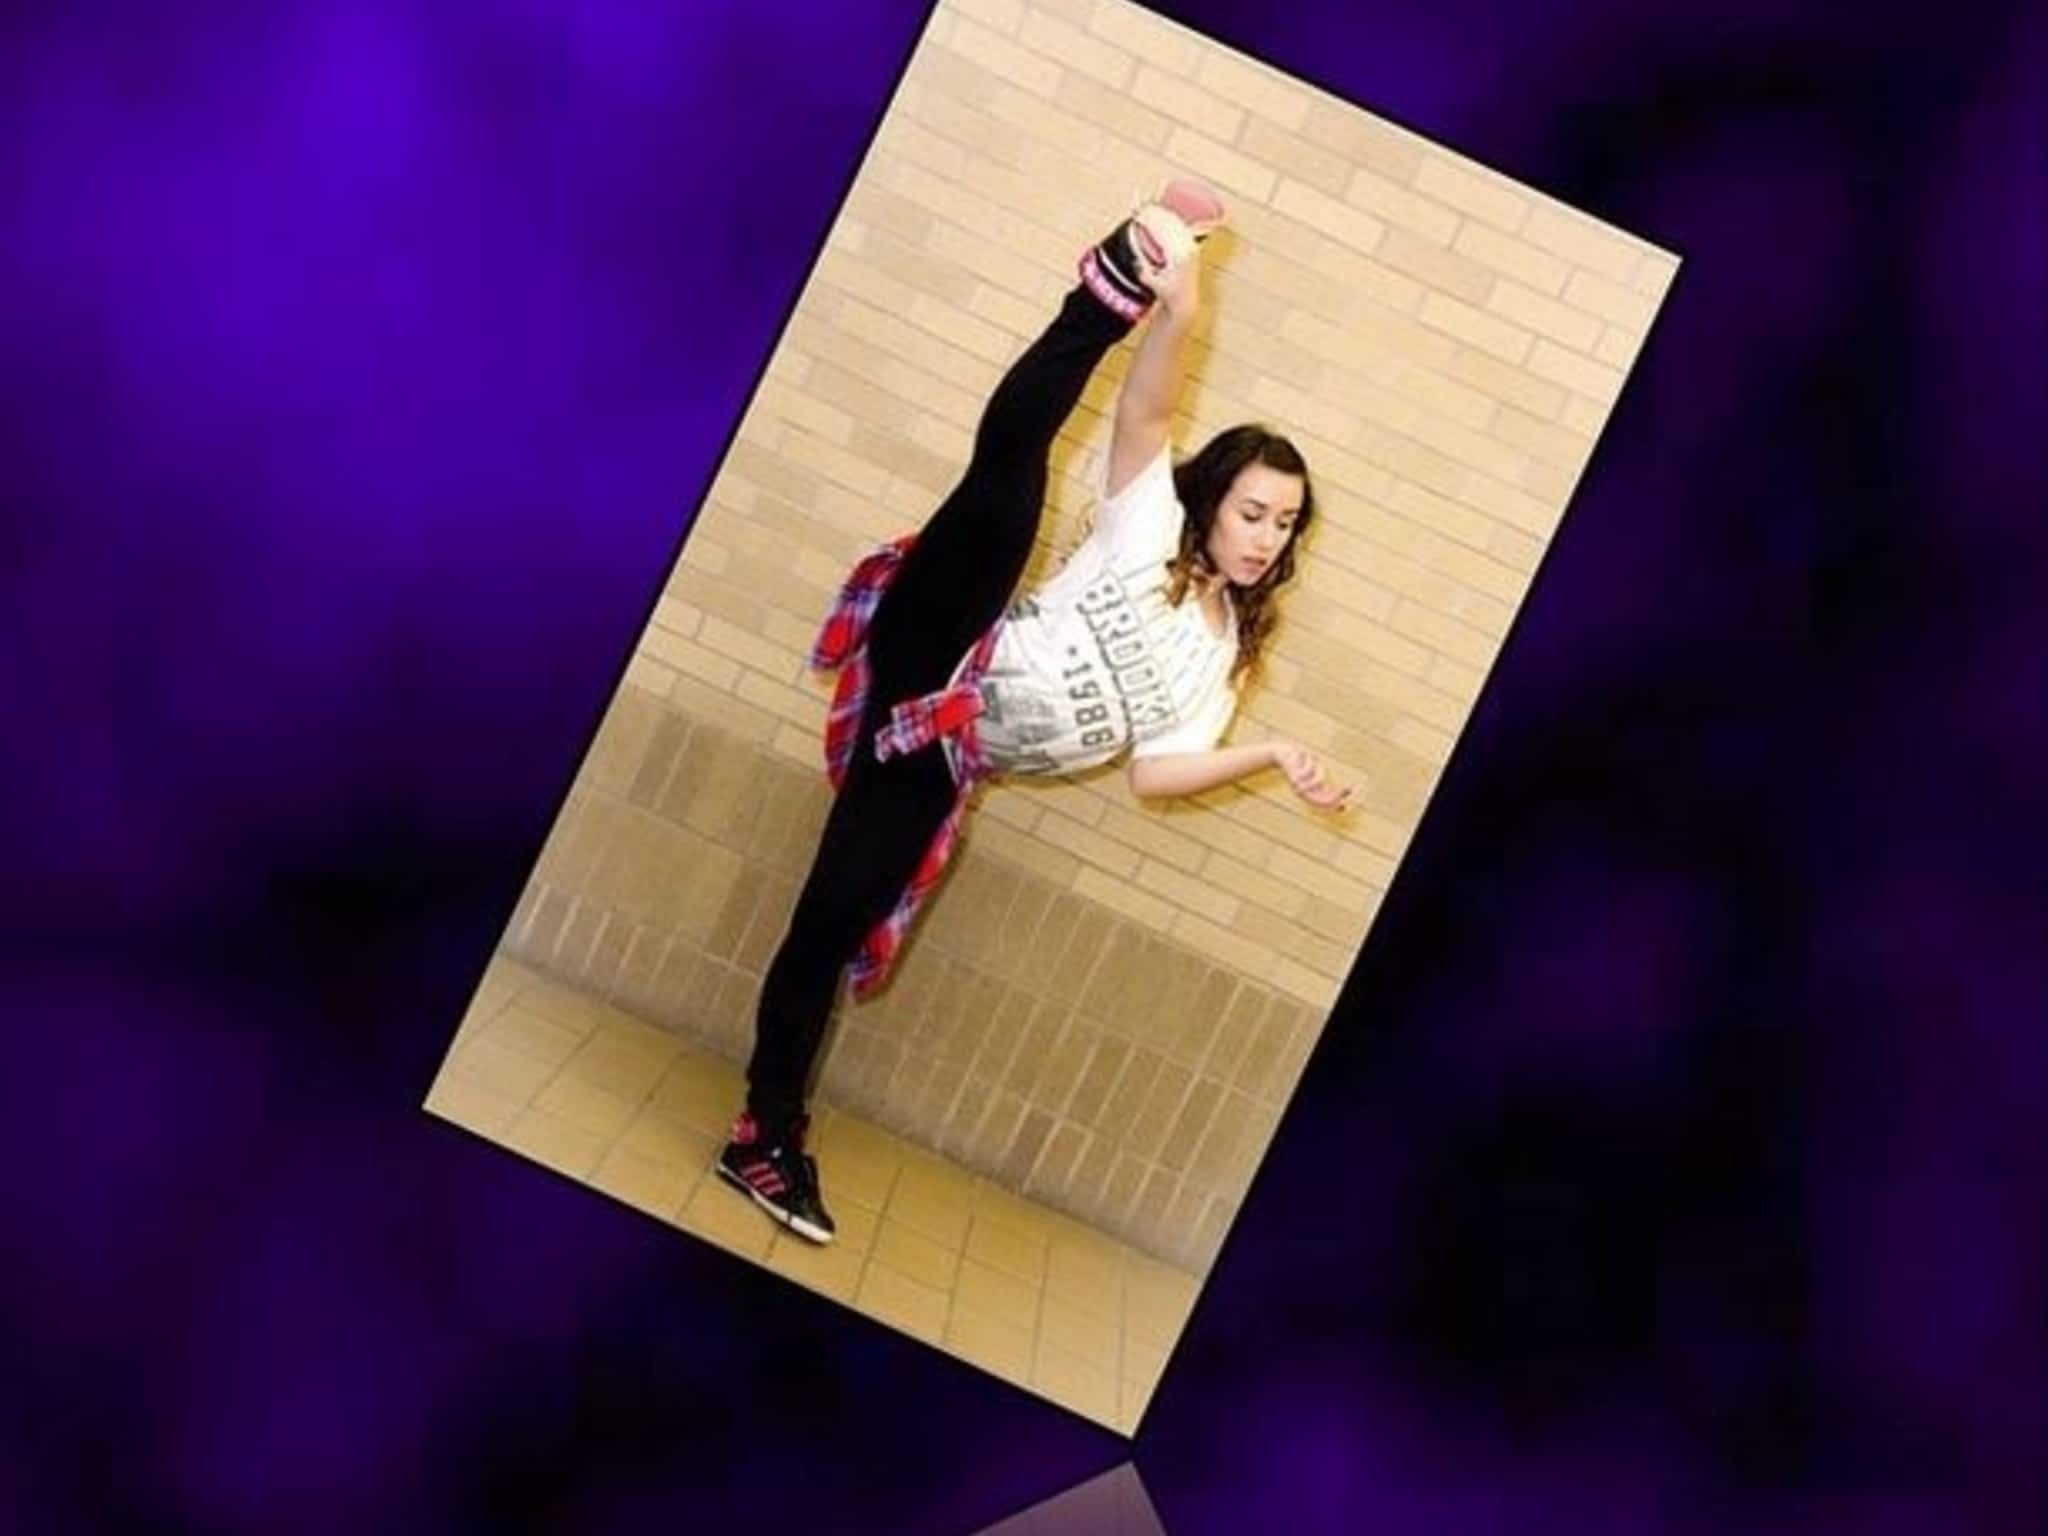 photo A New DAEI Dance School